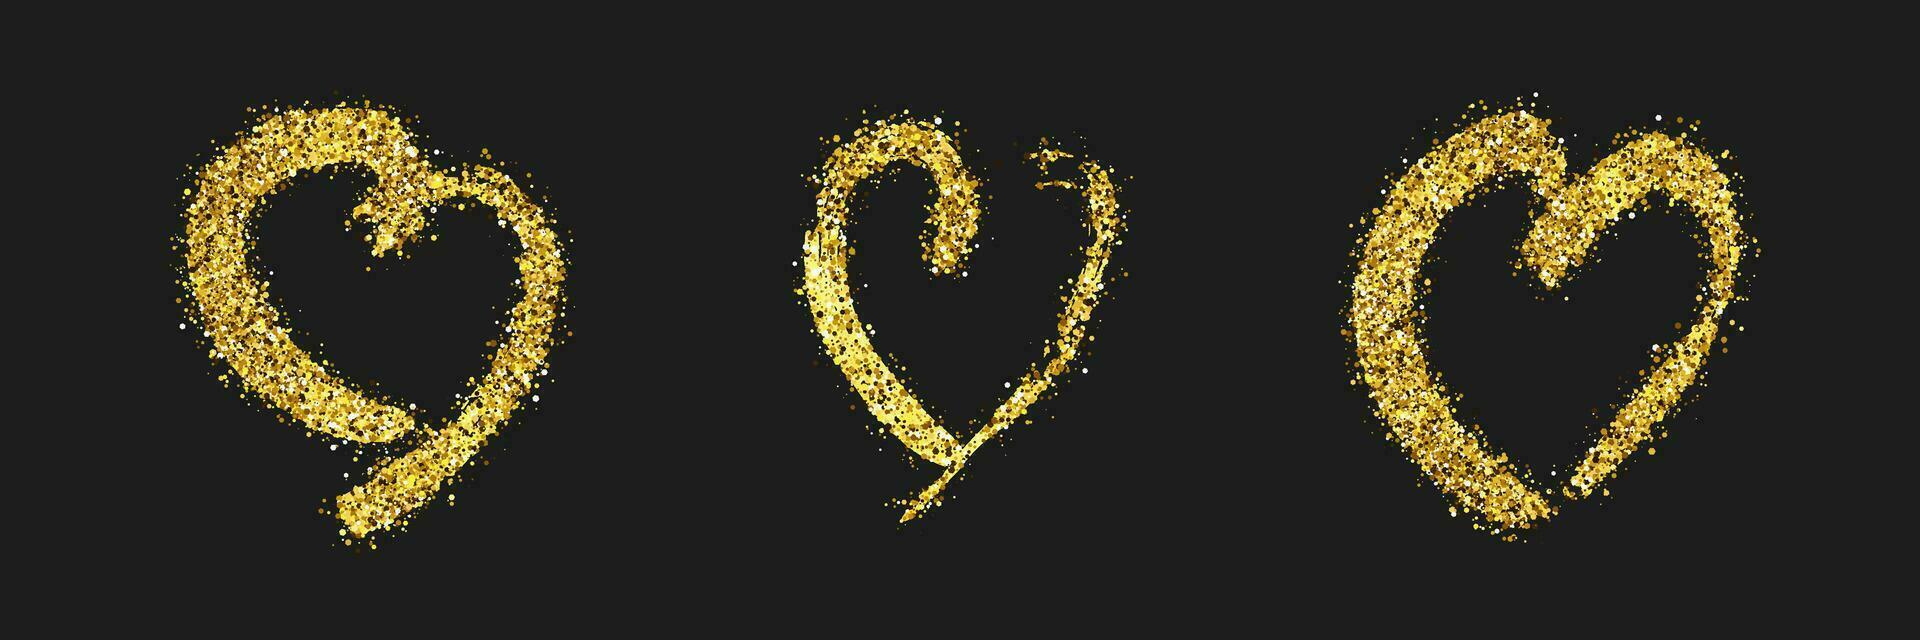 Set of three gold glitter doodle hearts on dark background. Gold grunge hand drawn heart. Romantic love symbol. Vector illustration.